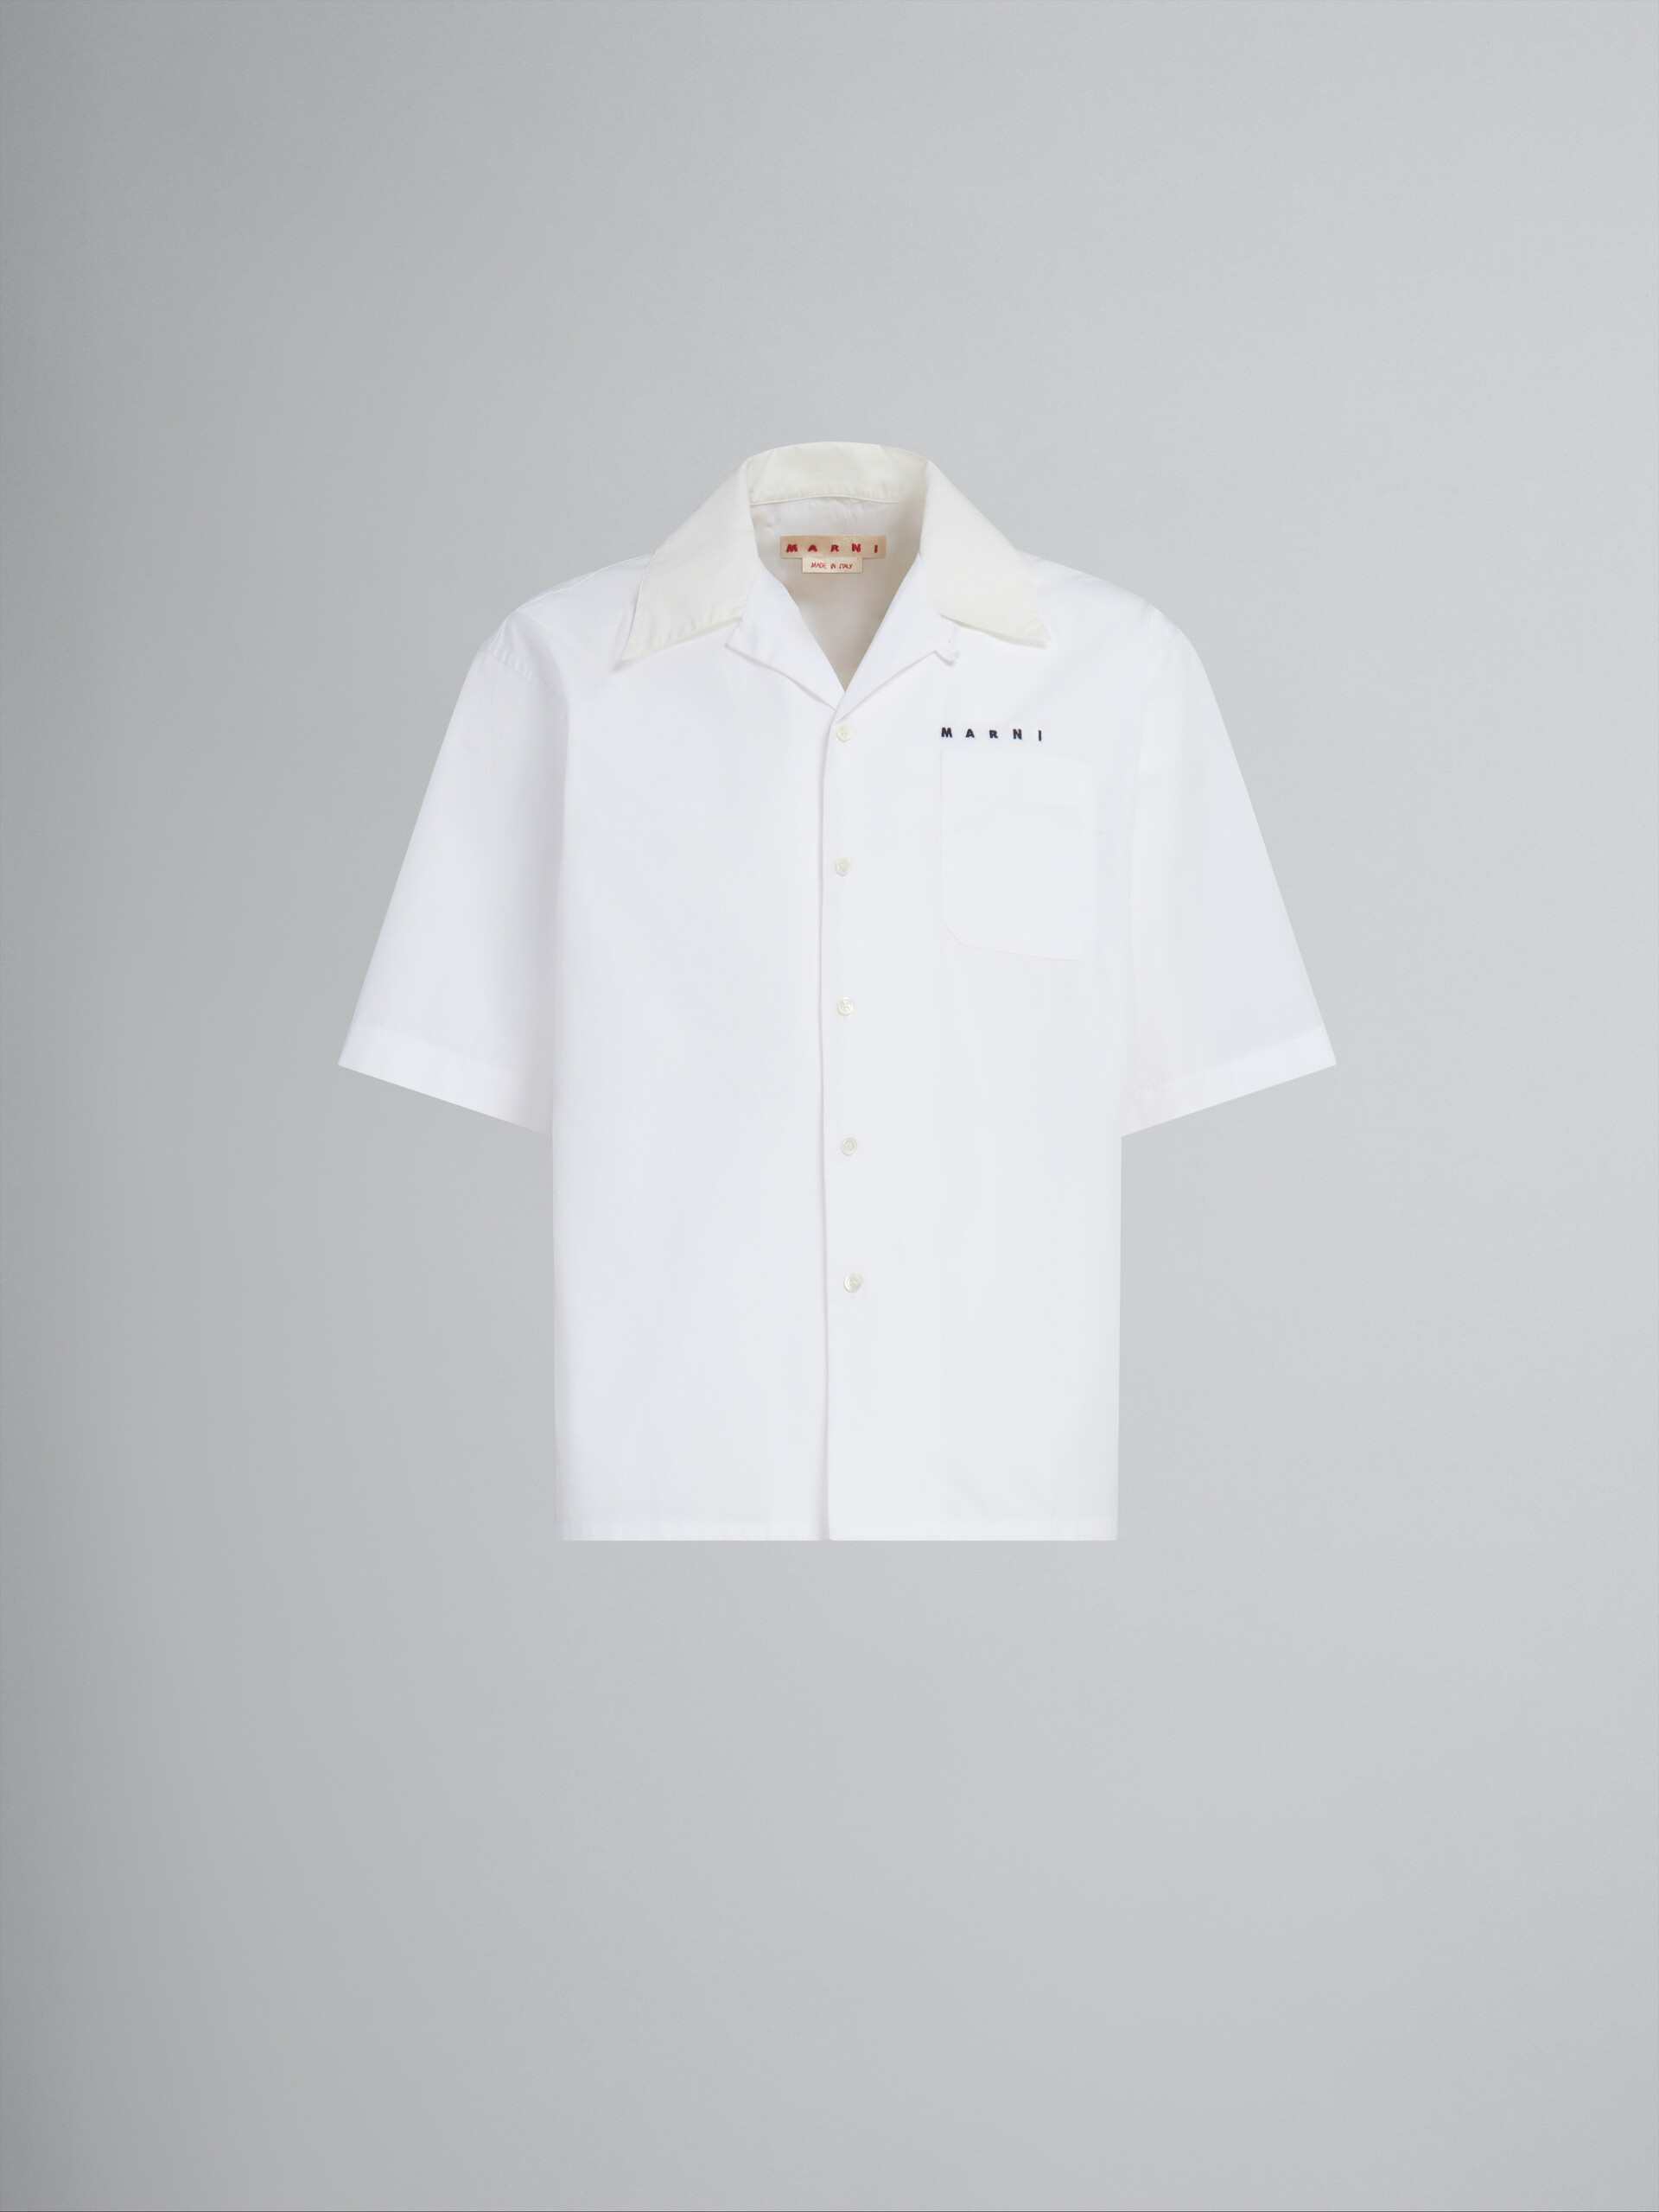 White shirt with hearts print - Shirts - Image 1